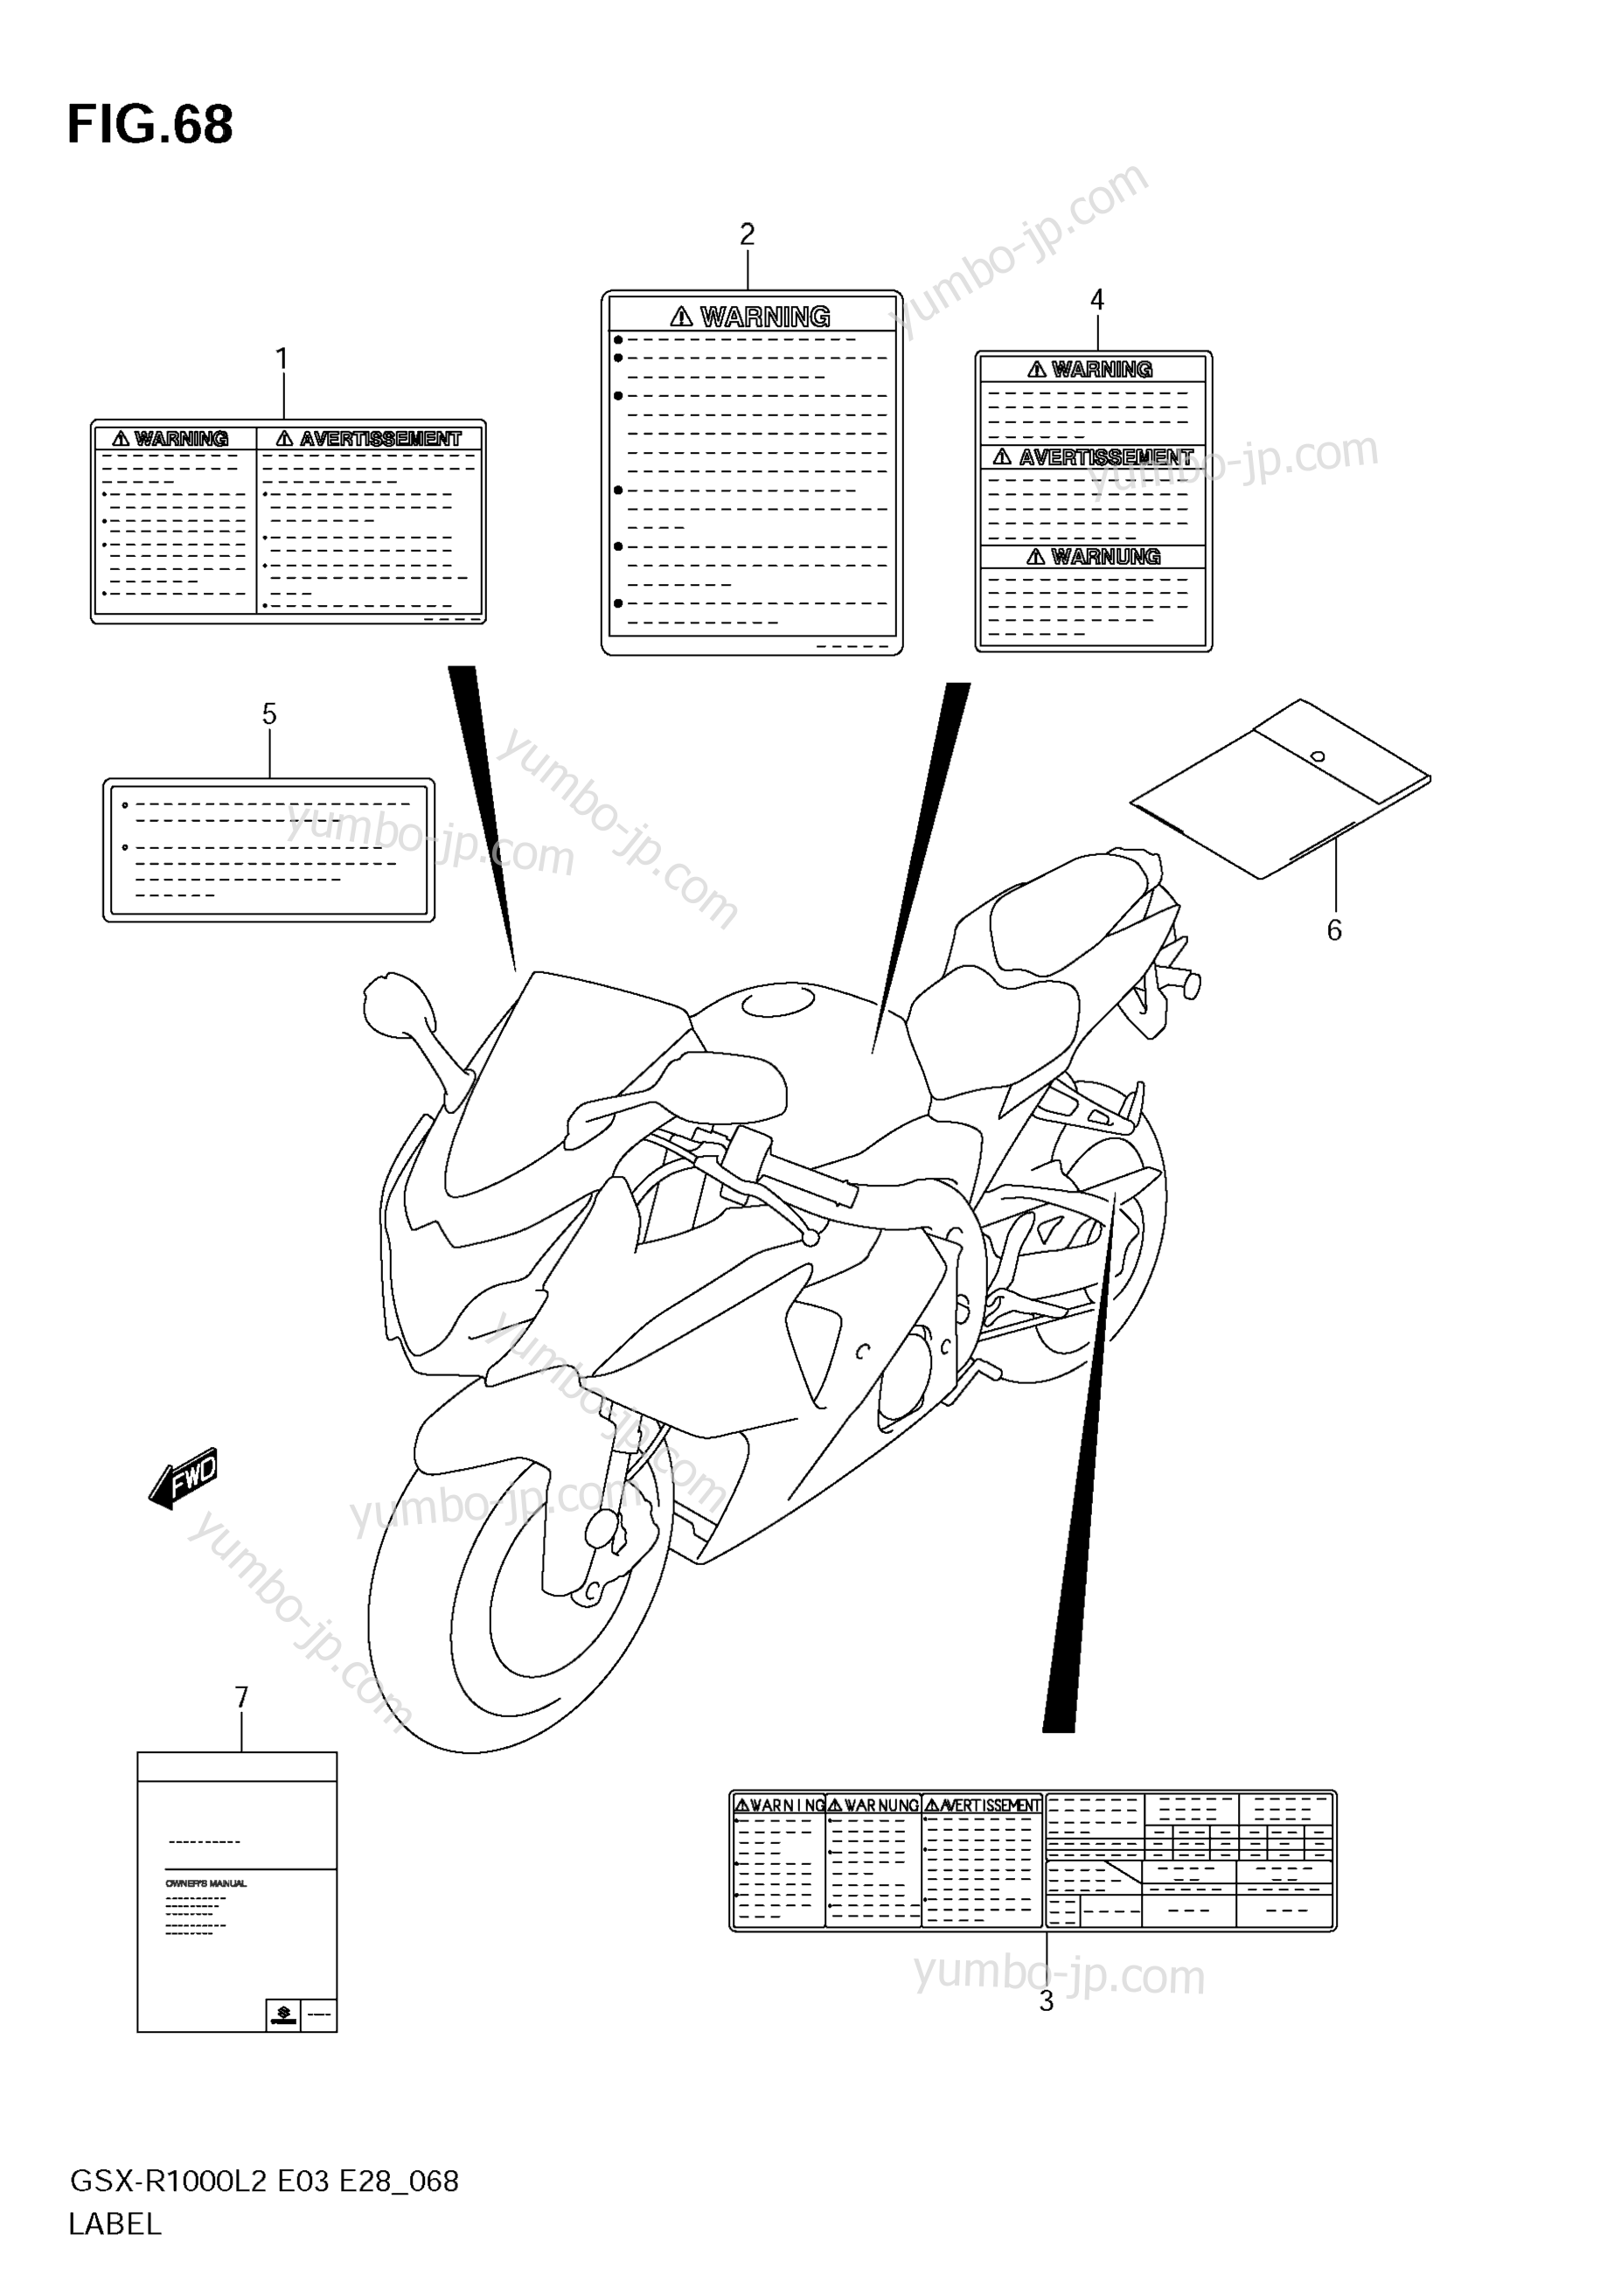 LABEL (GSX-R1000 L2 E28) for motorcycles SUZUKI GSX-R1000 2012 year